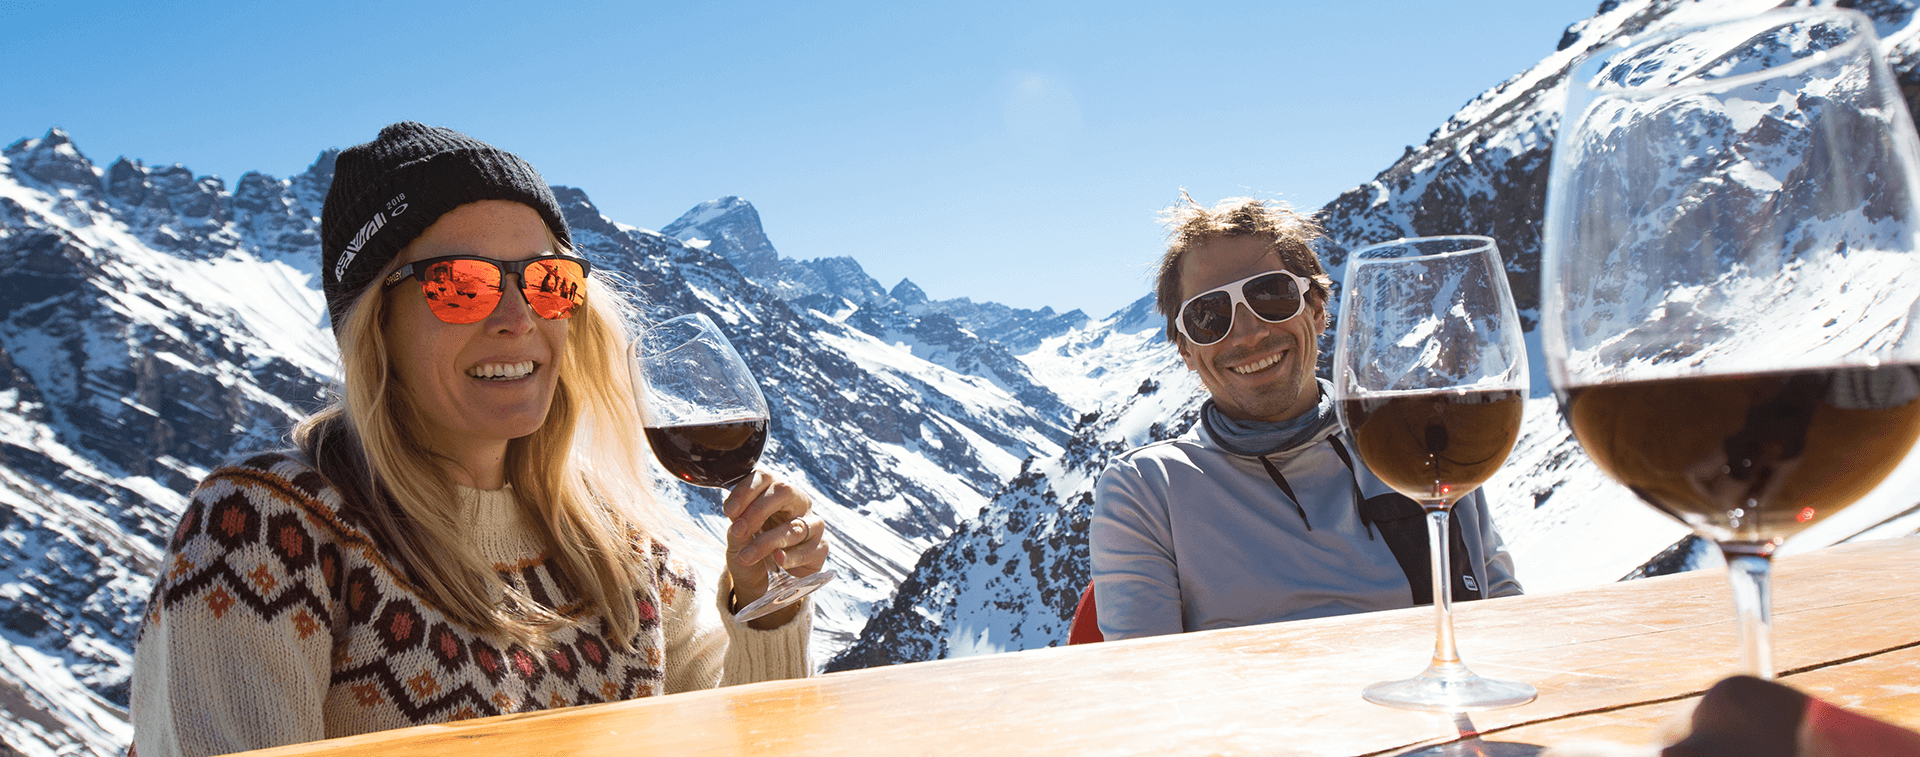 ski trip for couples